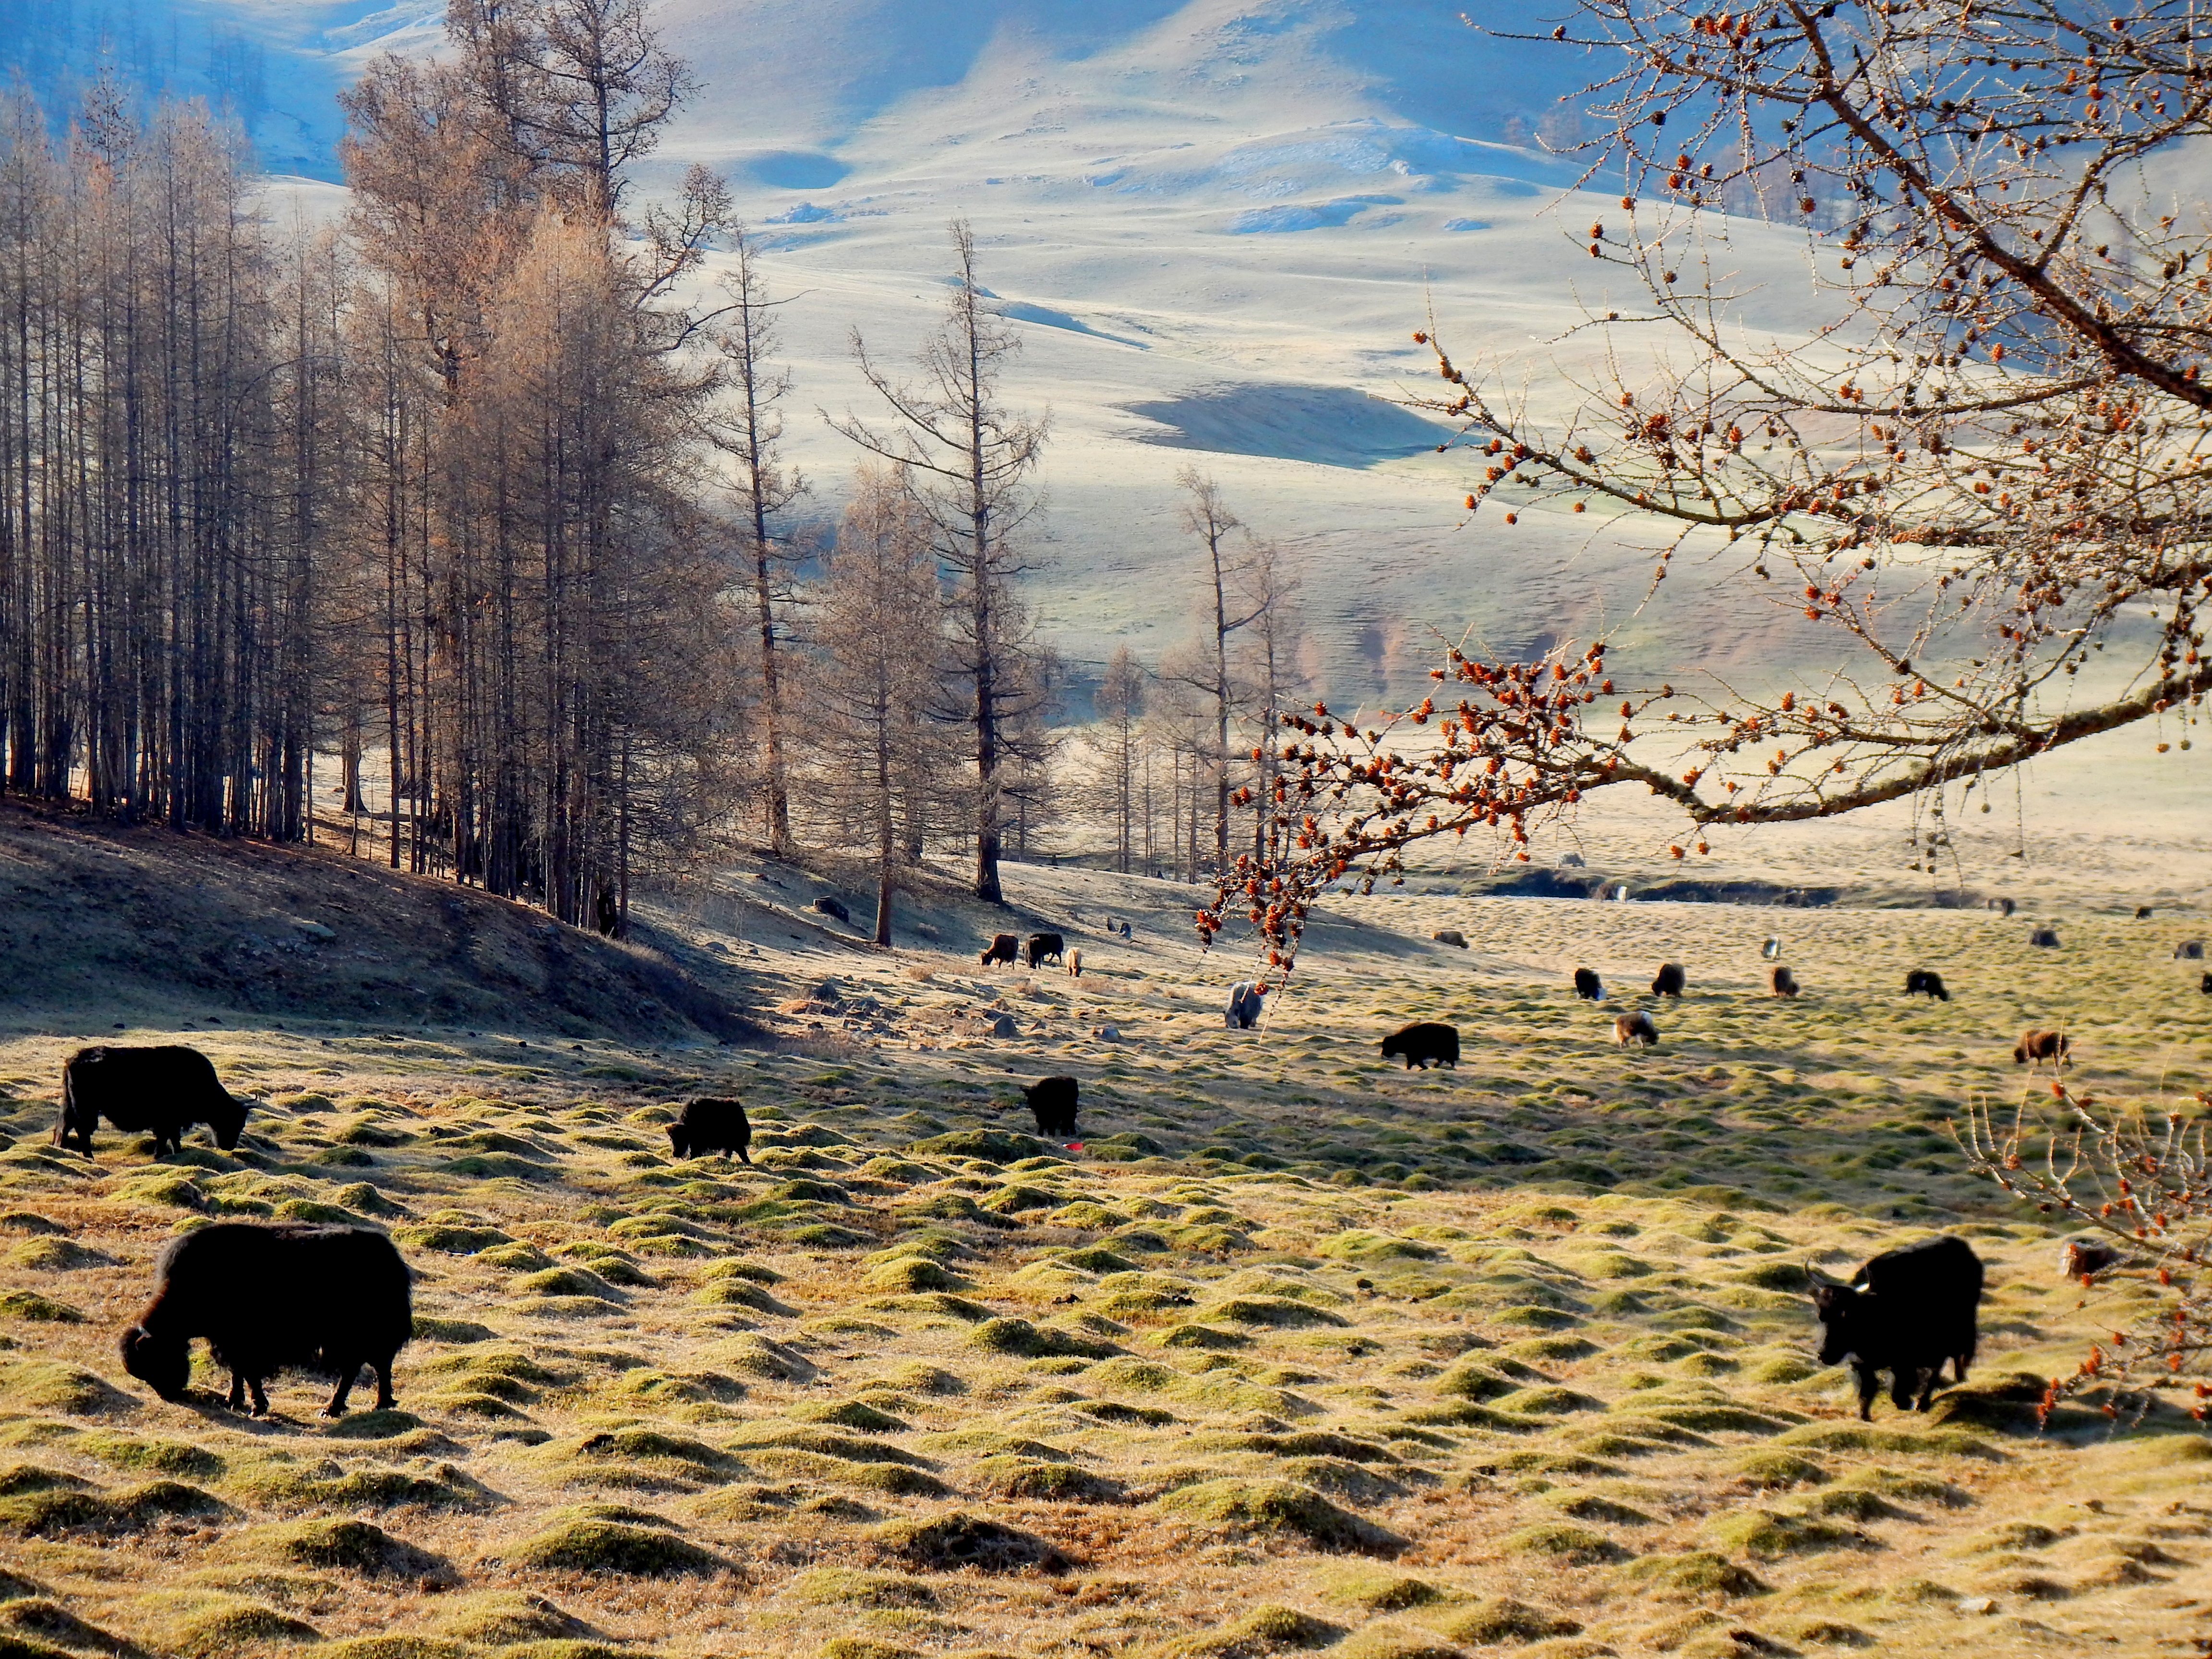 Ut's yak herd, roaming the countryside of northern Mongolia